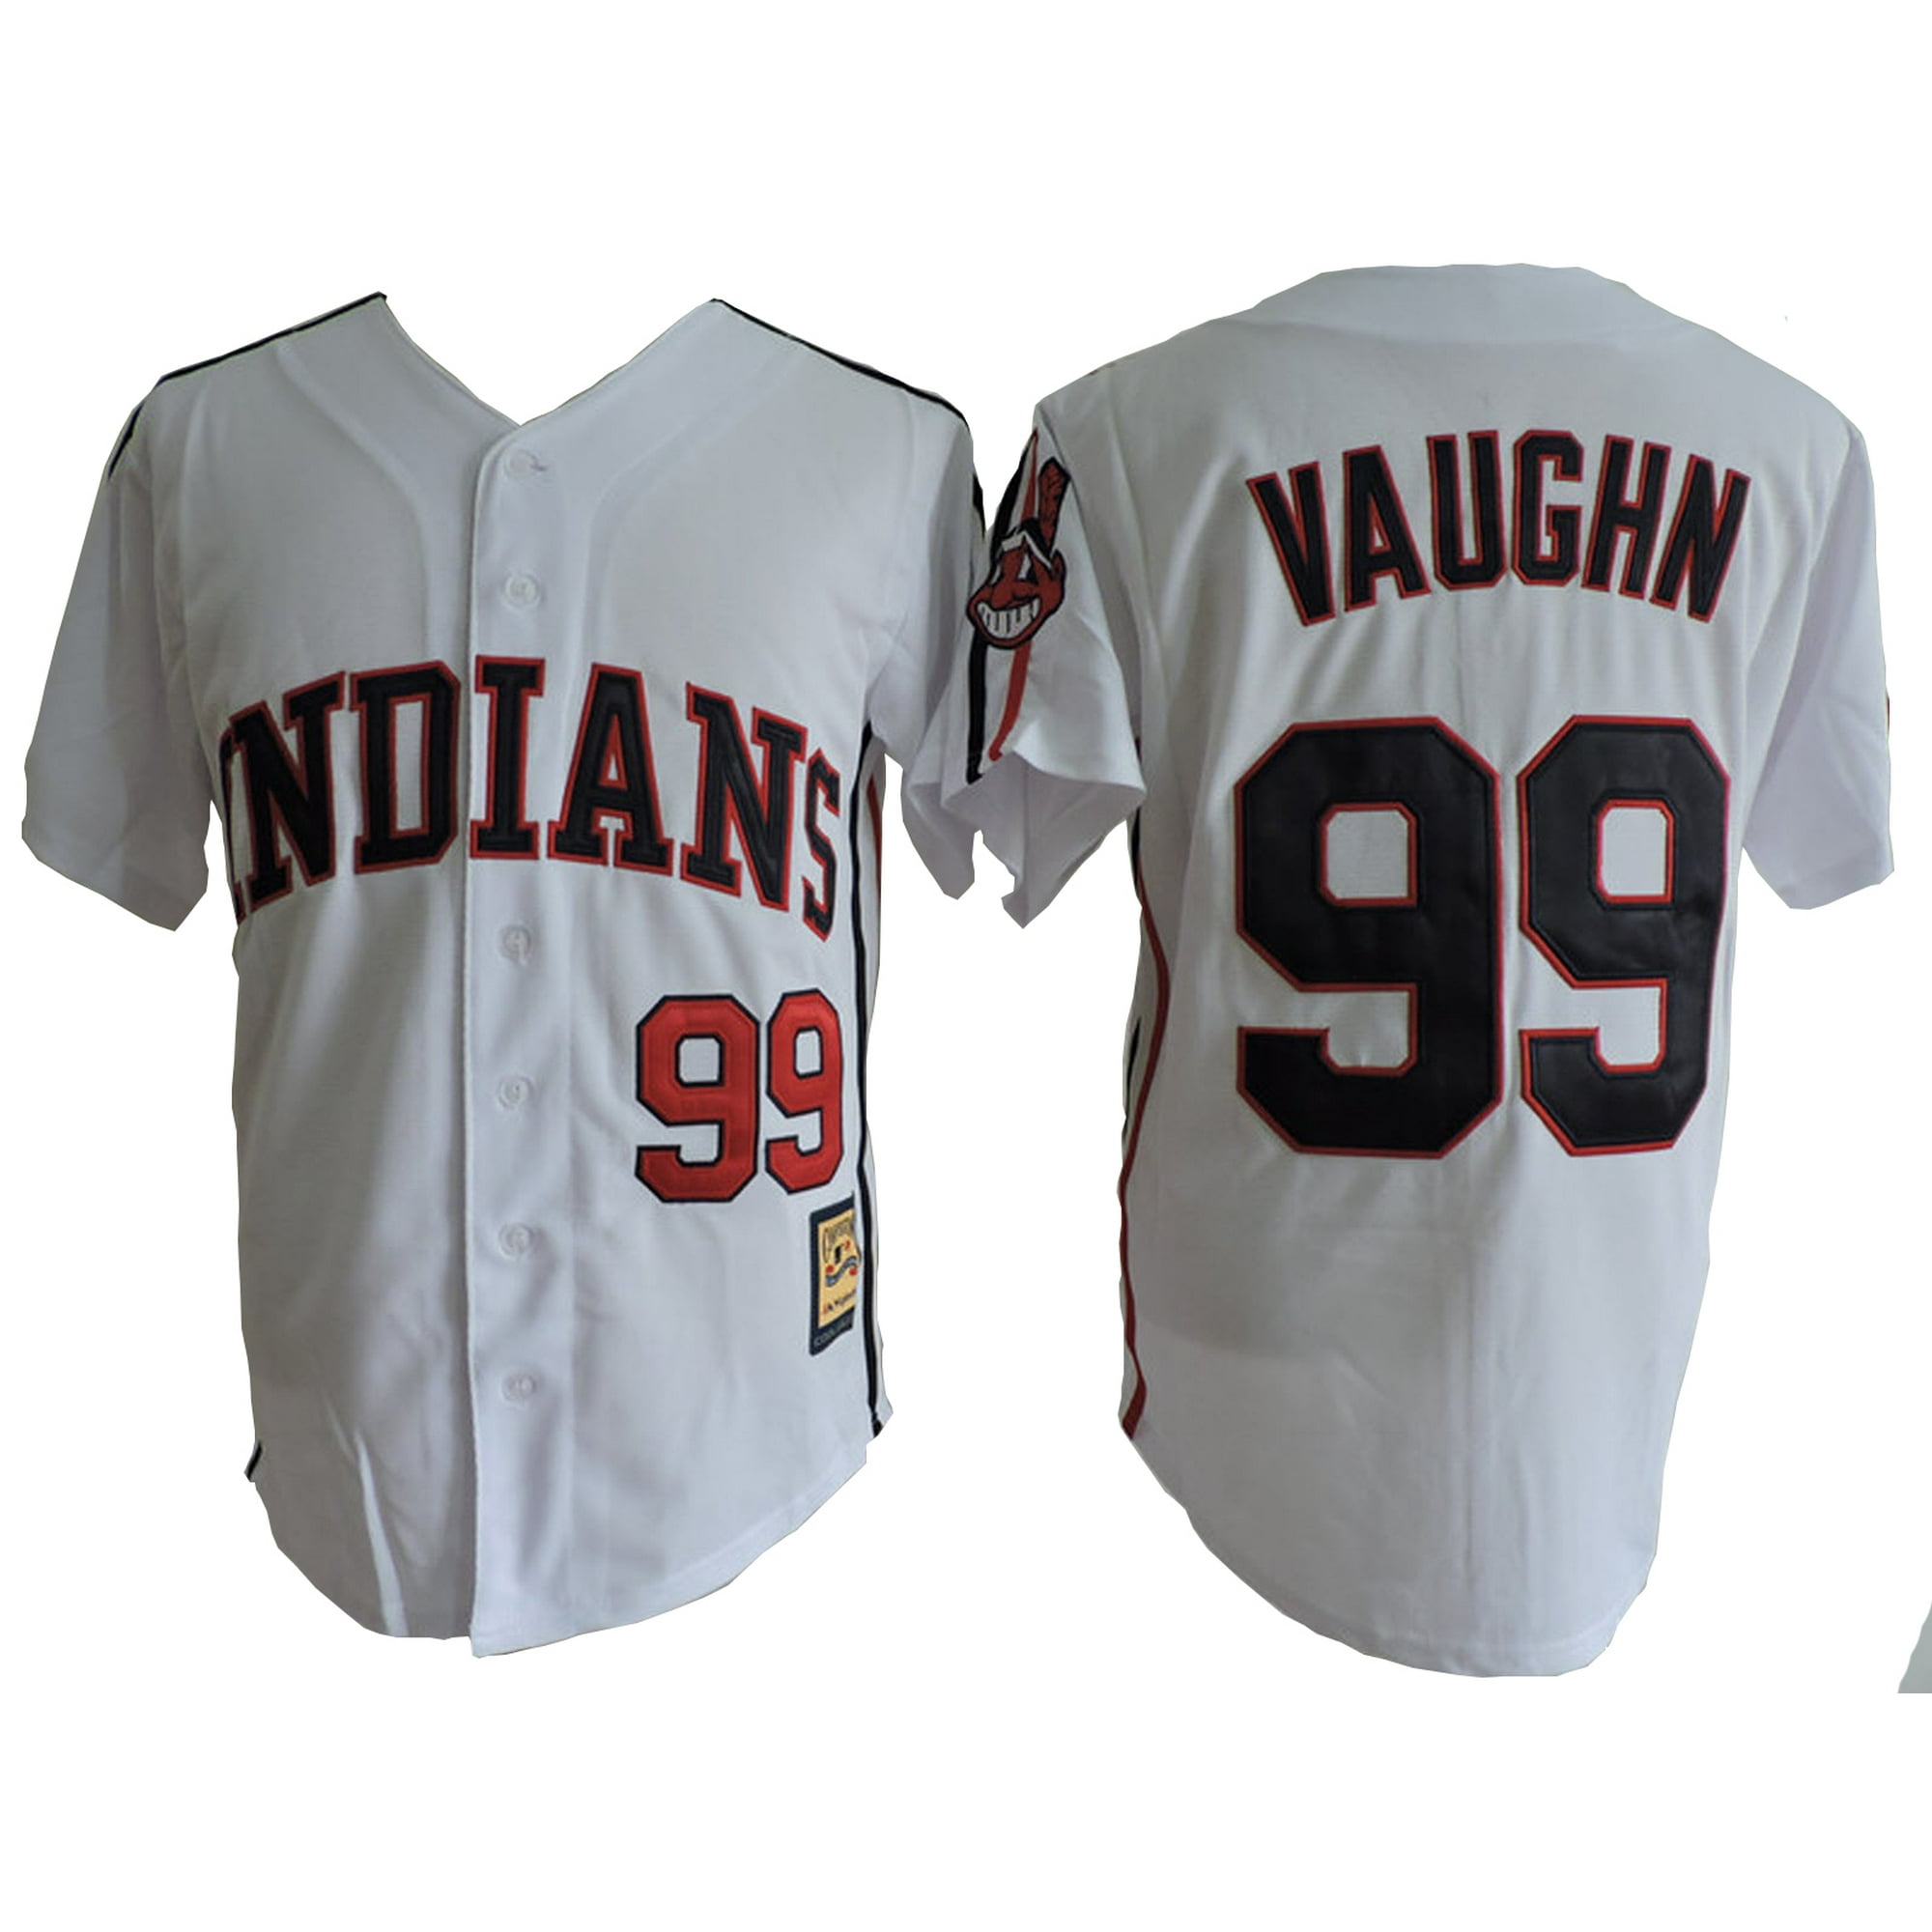 MyPartyShirt Rick Wild Thing Vaughn 99 Jersey Major League Costume Movie White Uniform Gift - Mens Large